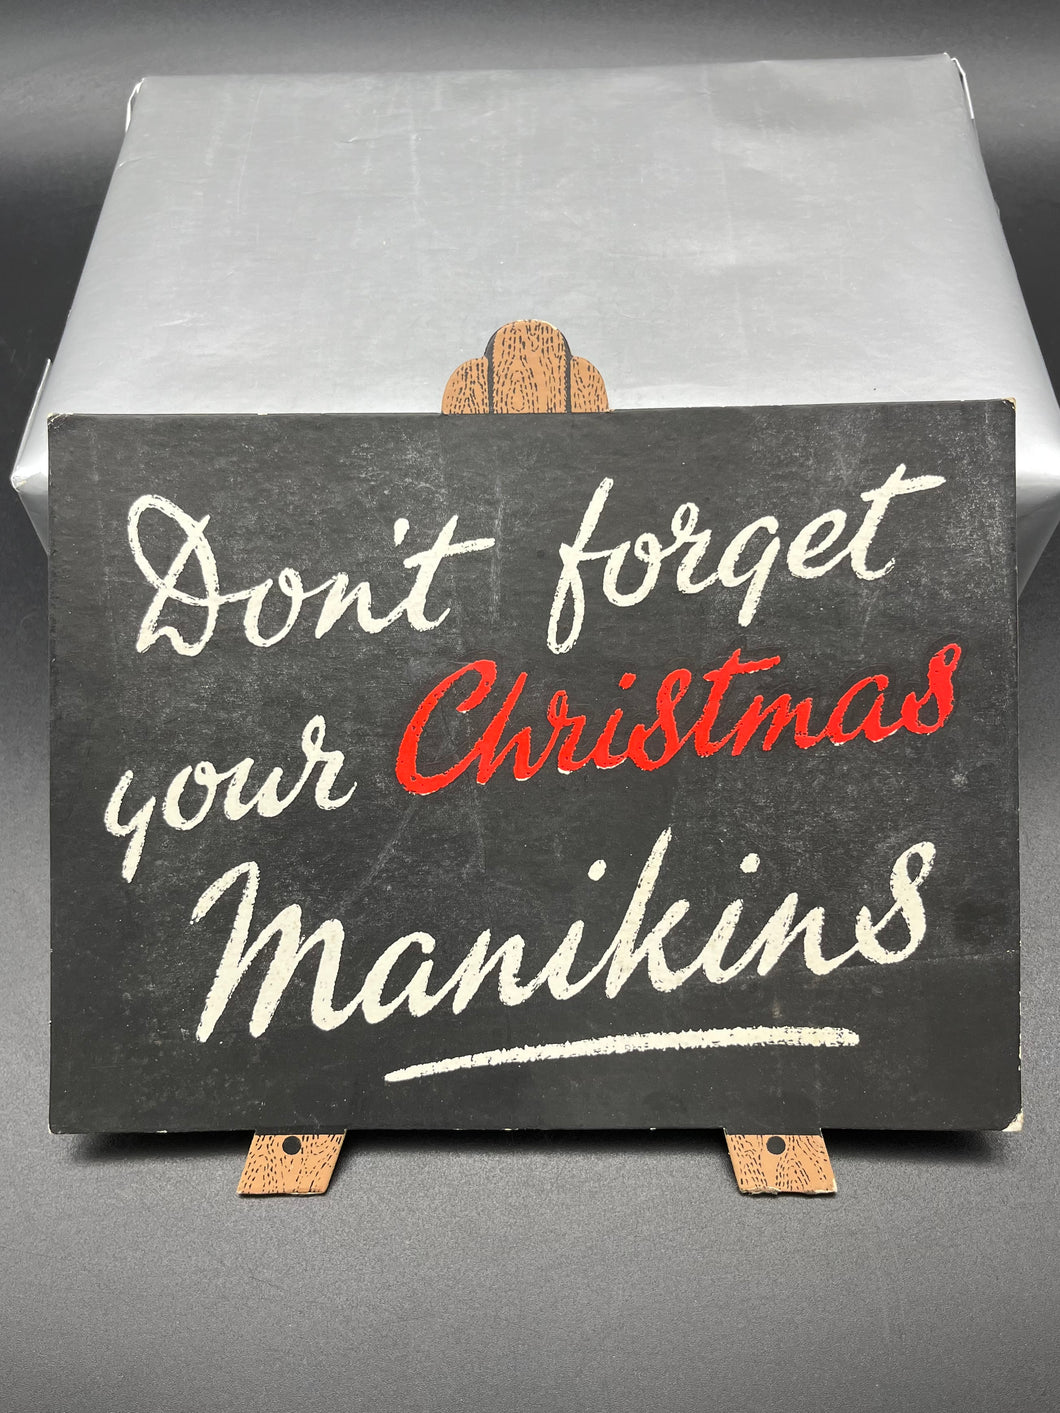 Manikin Cigars Christmas Cardboard Display Advertisement